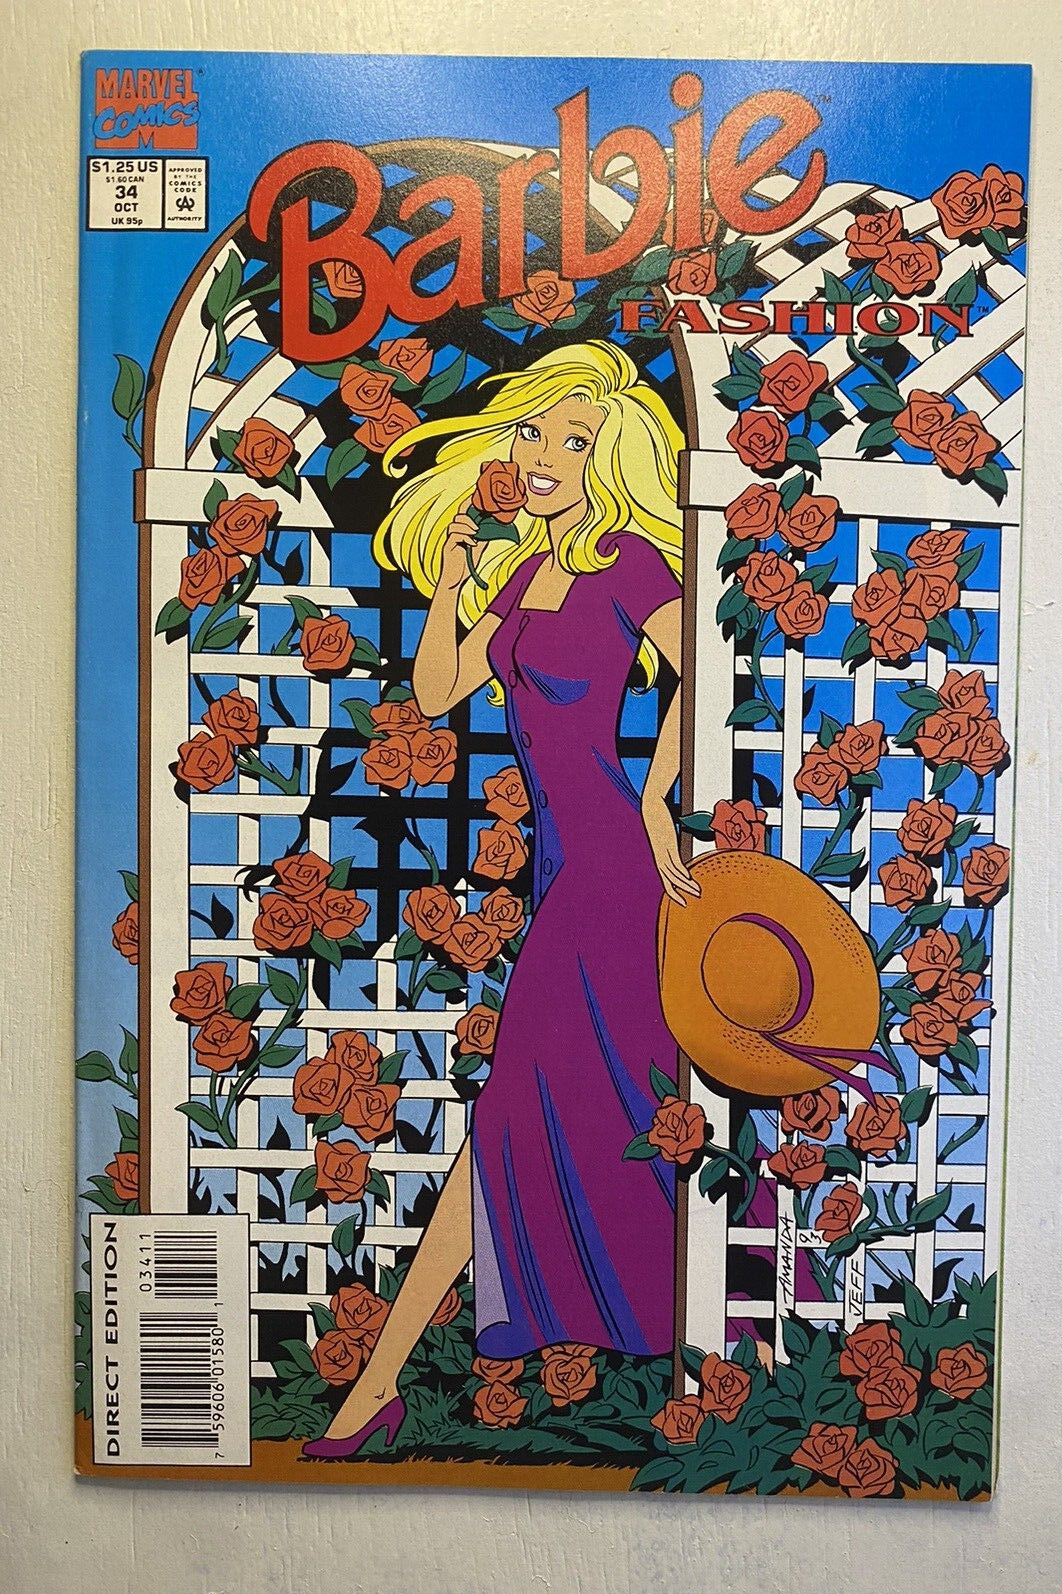 BARBIE Fashion #34 HIGH GRADE Marvel Comic Book - 1991 SERIES 1993